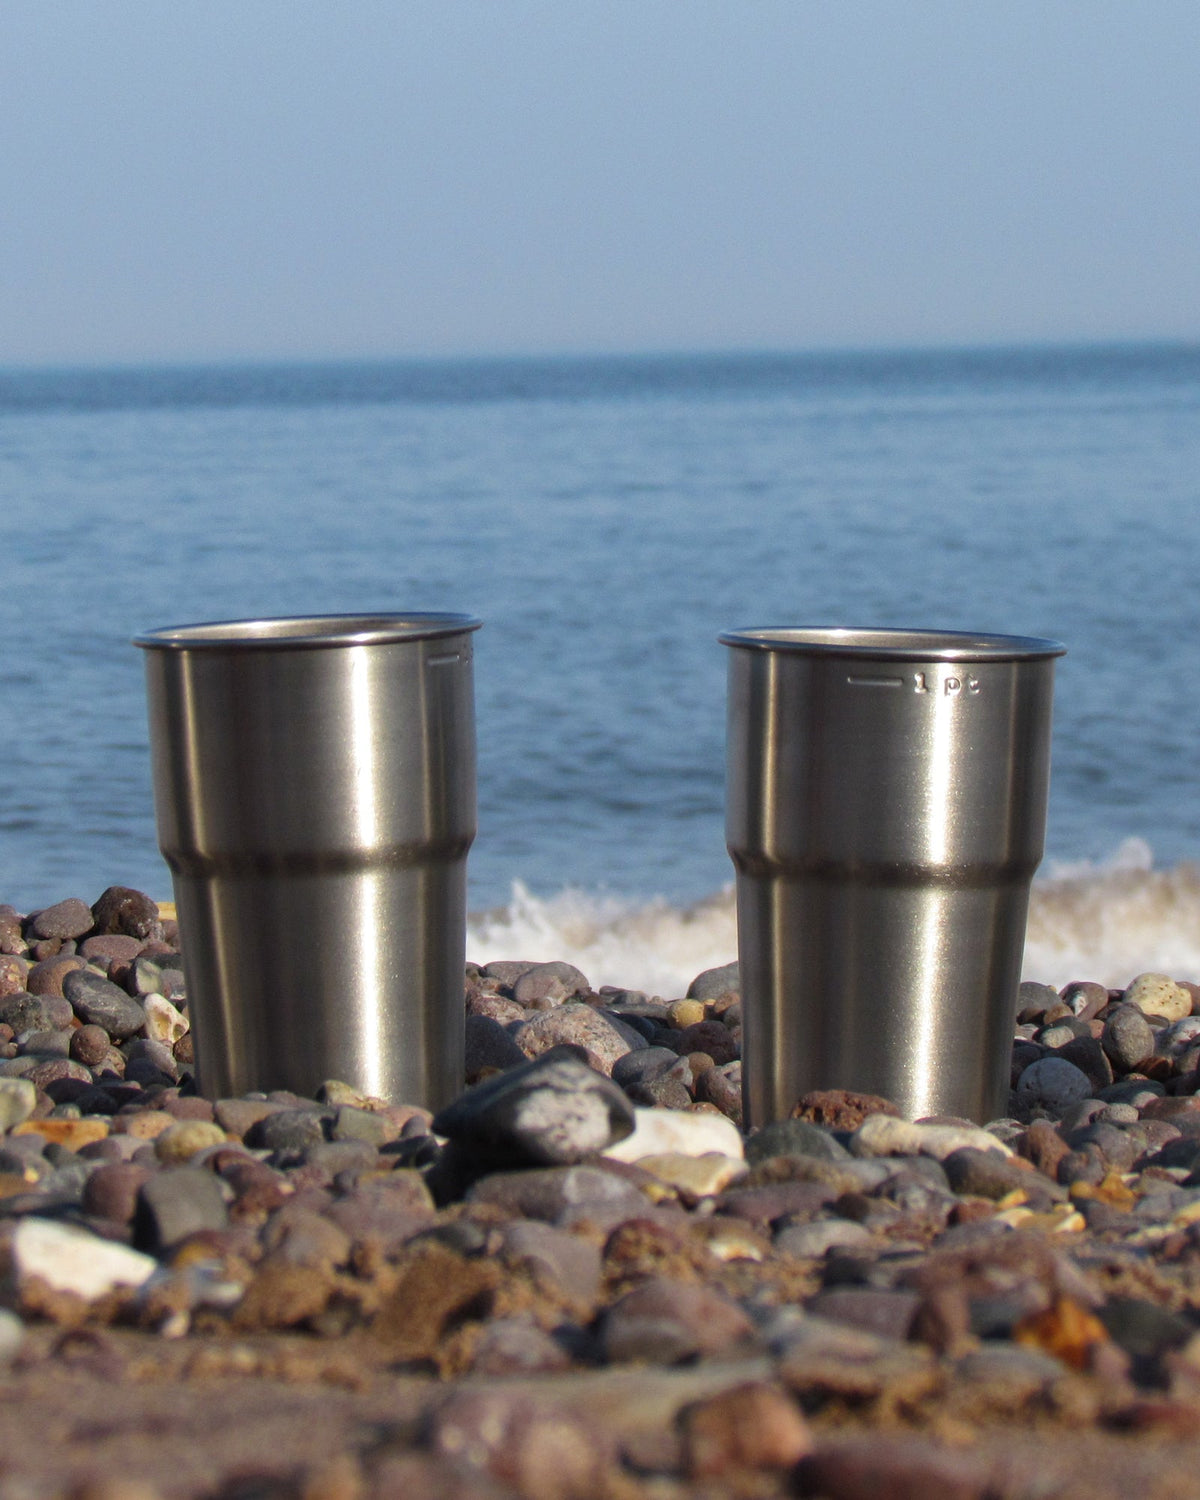 4 x Stainless Steel Pint Cups - BRIT LOCKER